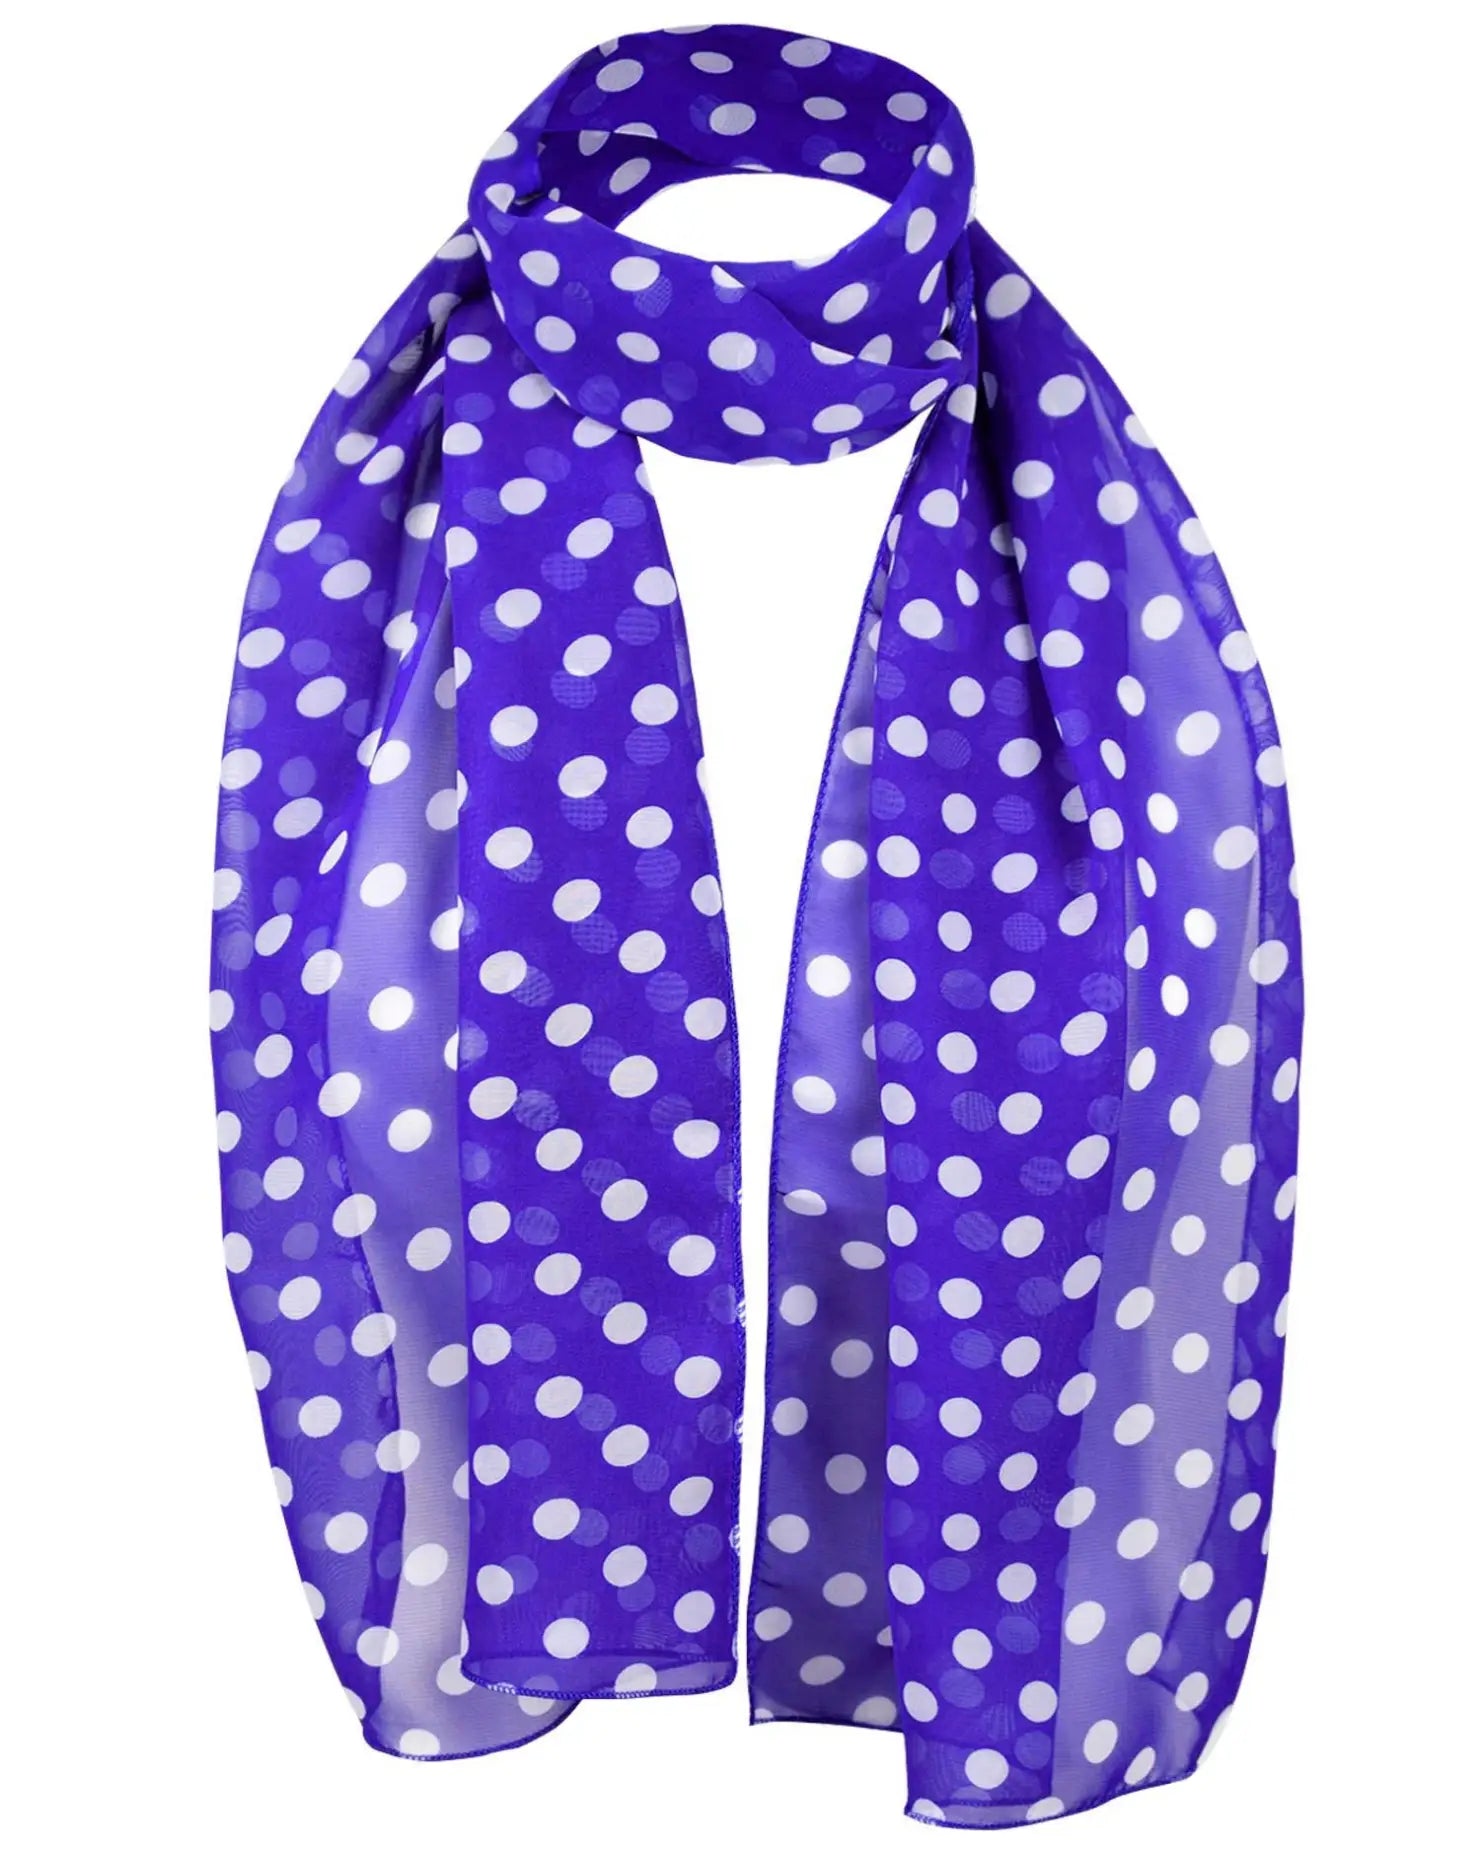 Polka dot chiffon scarf: purple and white design